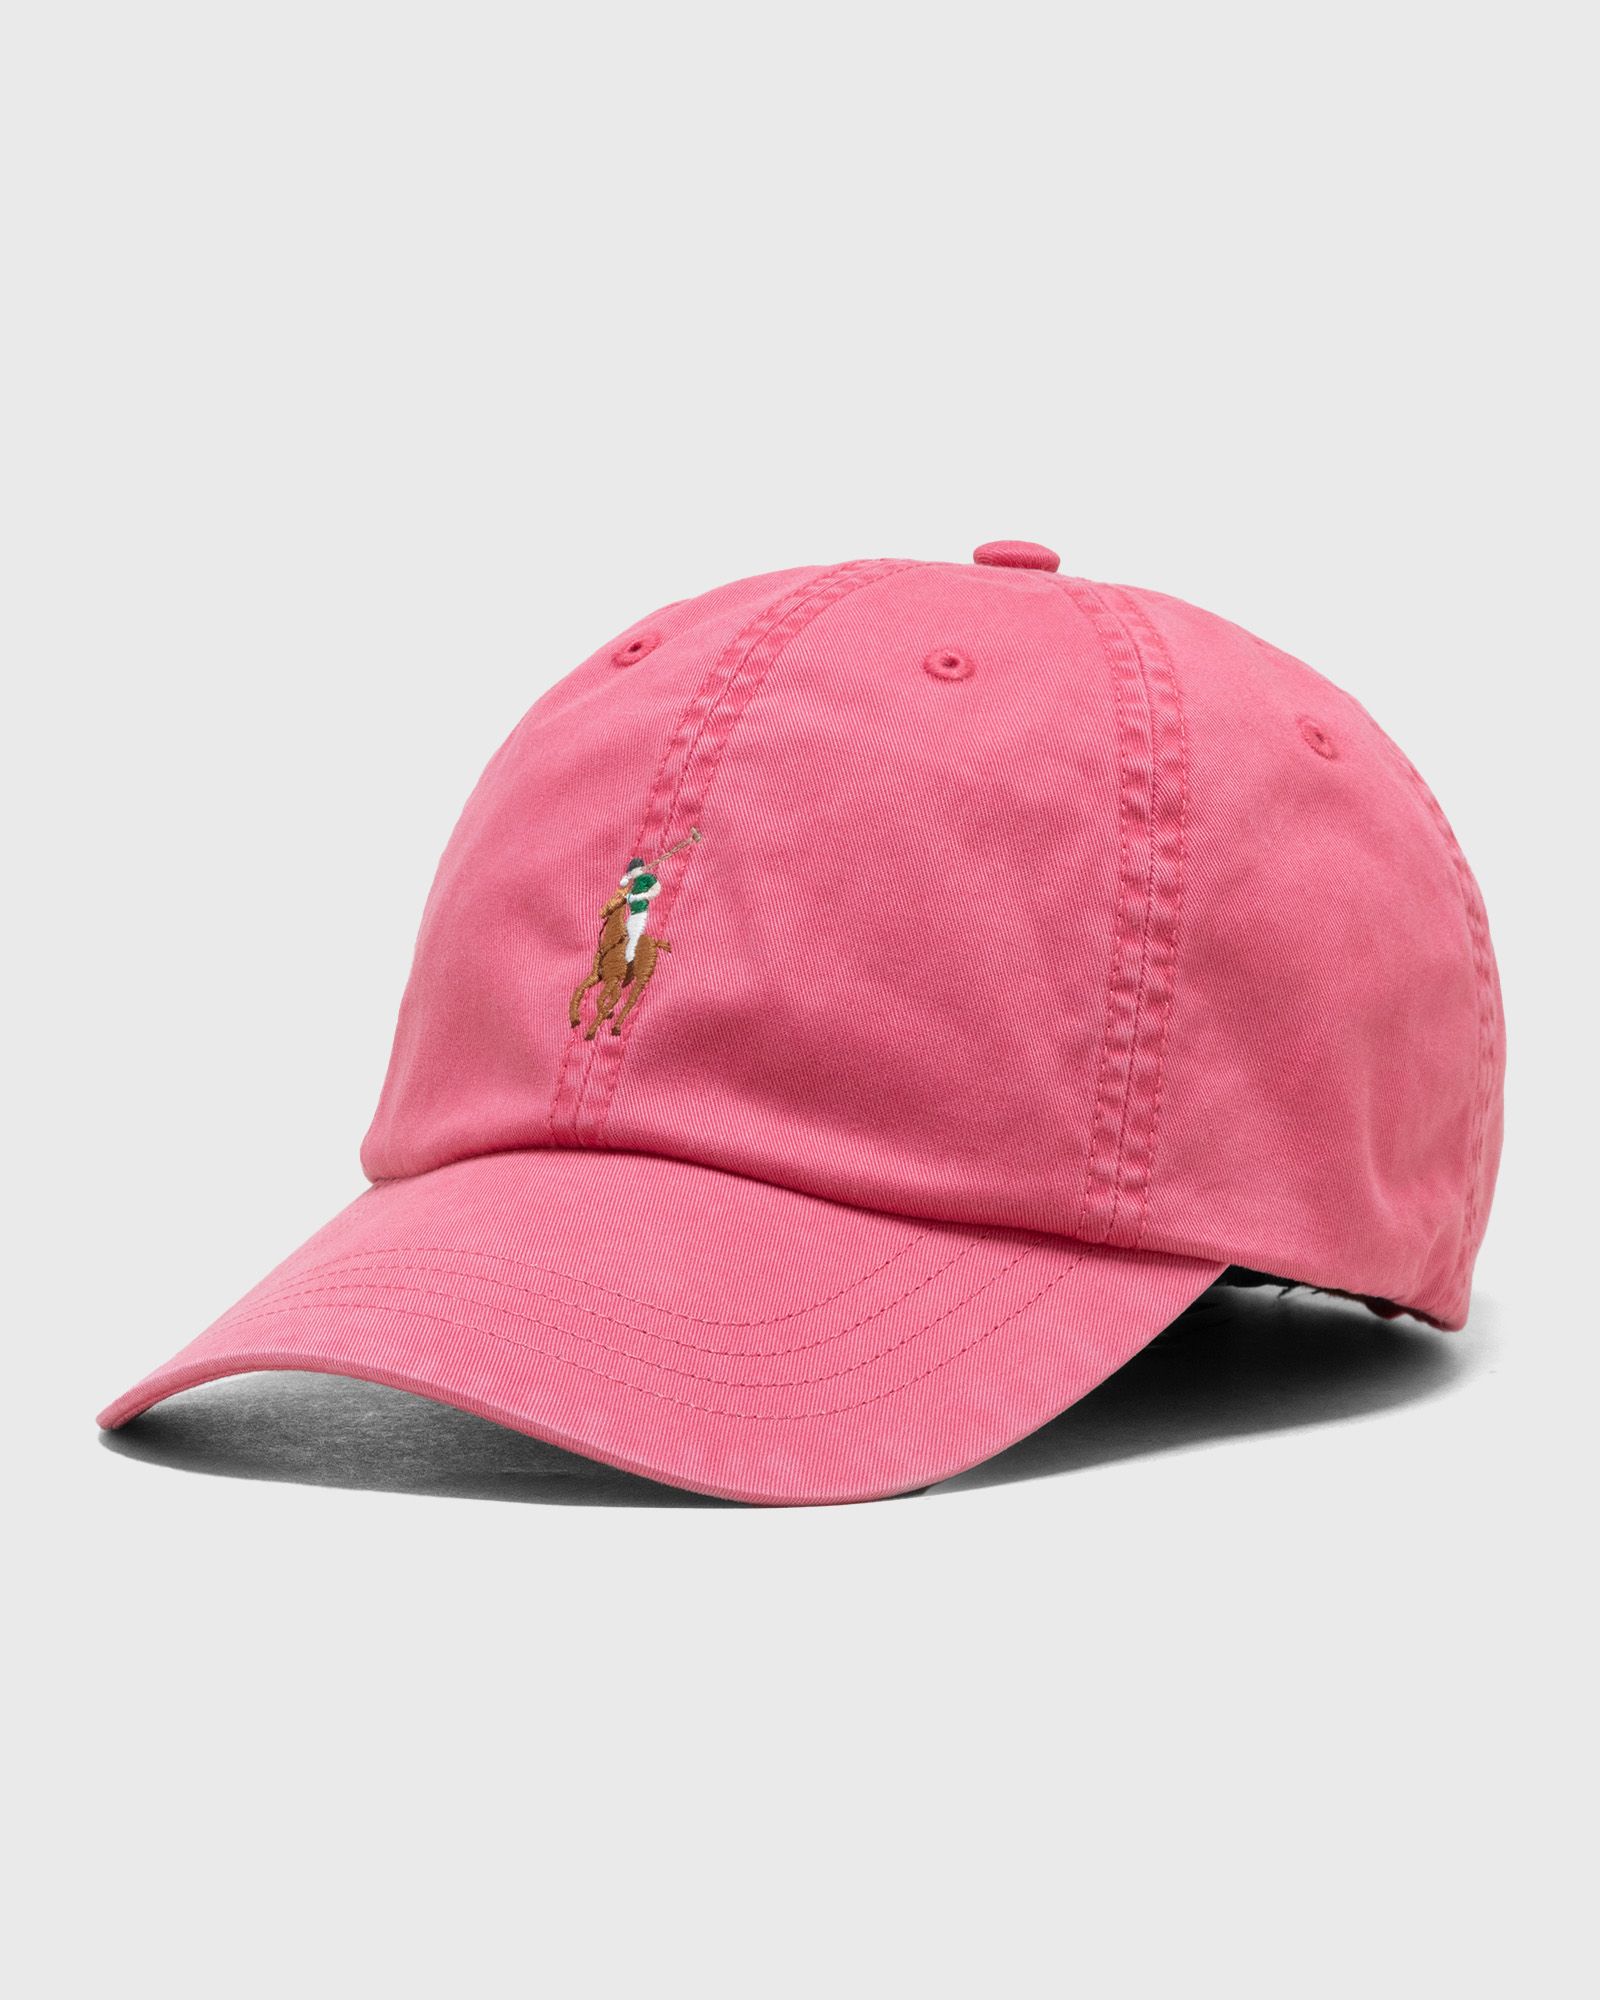 Polo Ralph Lauren - cls sprt cap-hat men caps pink in größe:one size